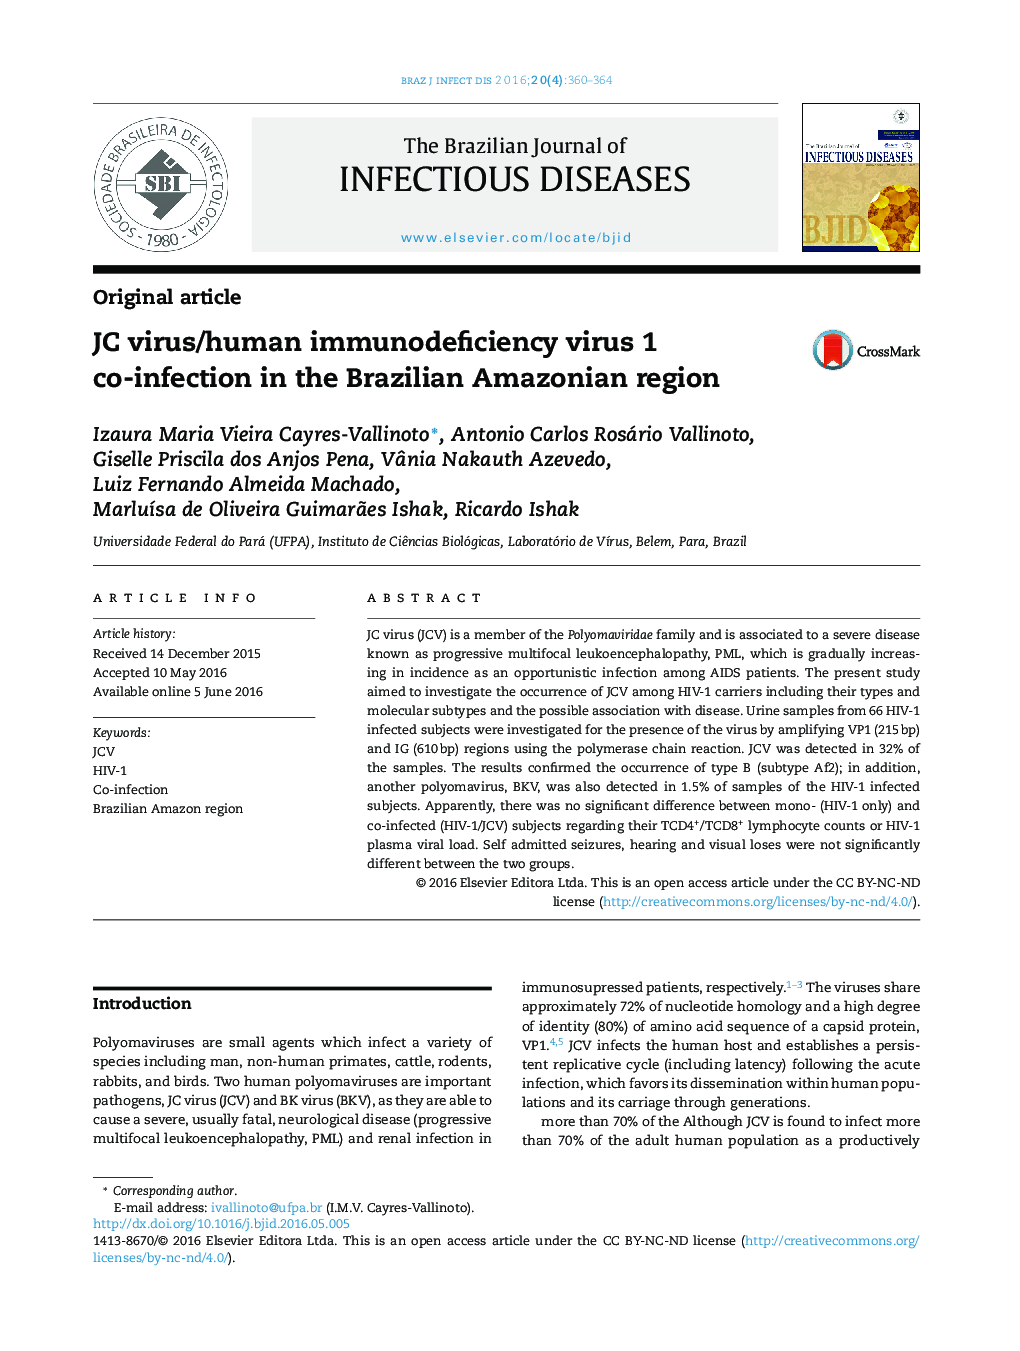 JC virus/human immunodeficiency virus 1 co-infection in the Brazilian Amazonian region